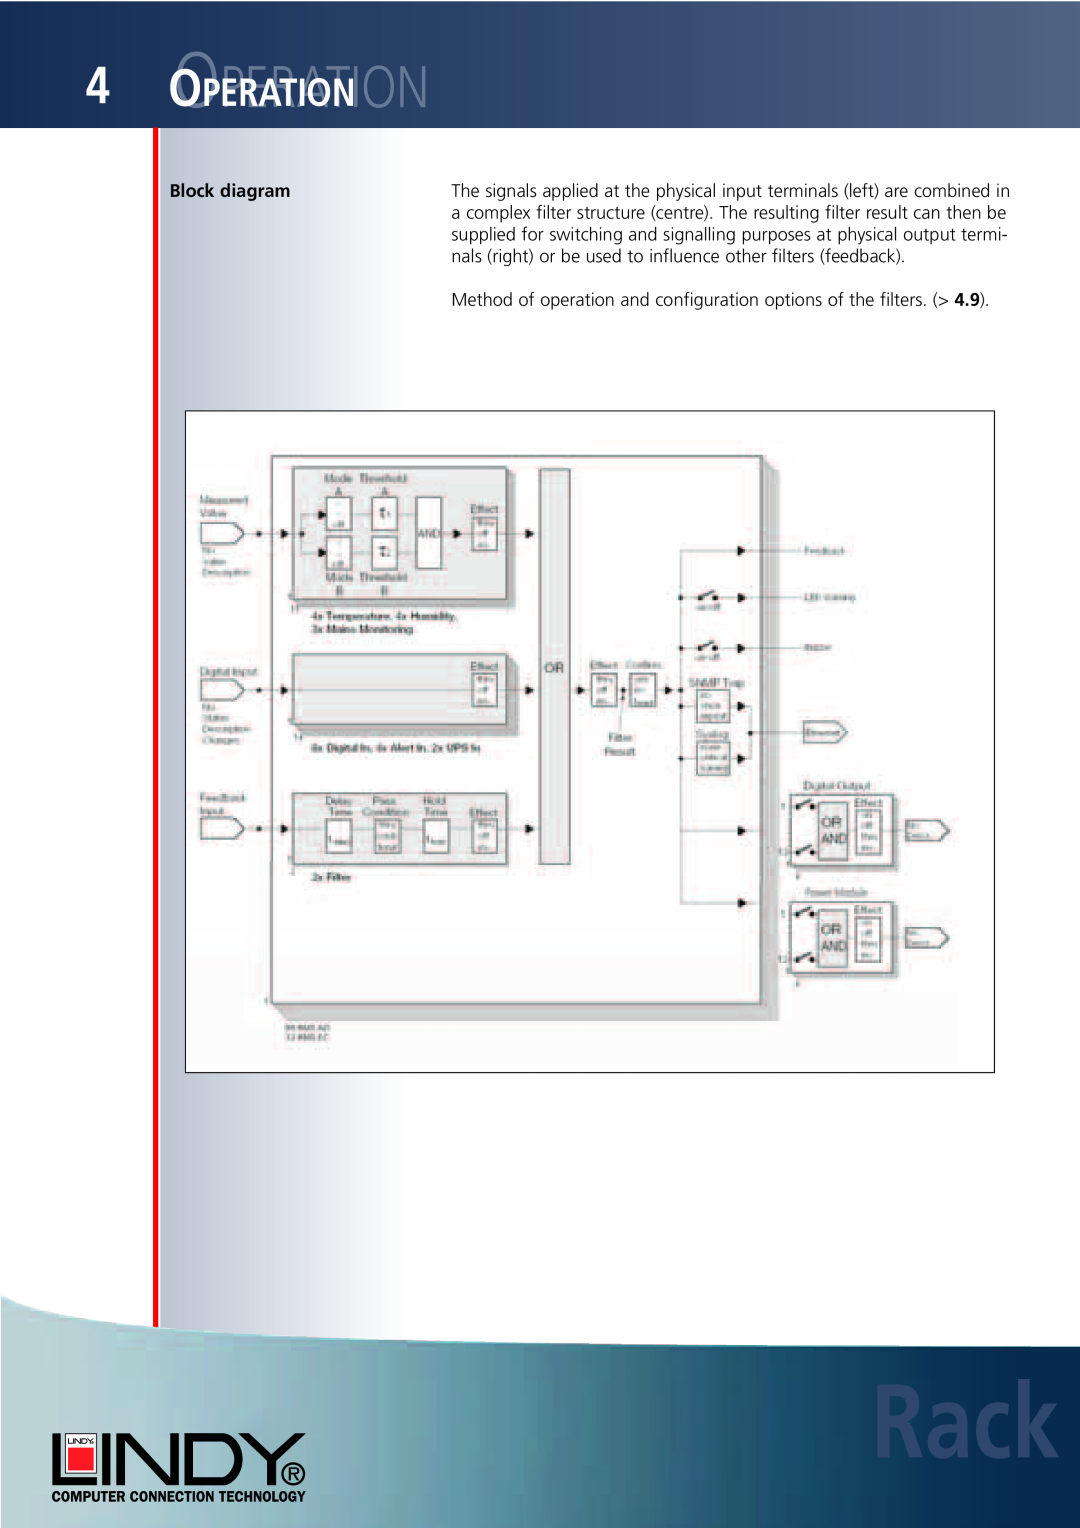 Lindy Carbon Monoxide Alarm user manual Rack, Ooperationperation, Block diagram 